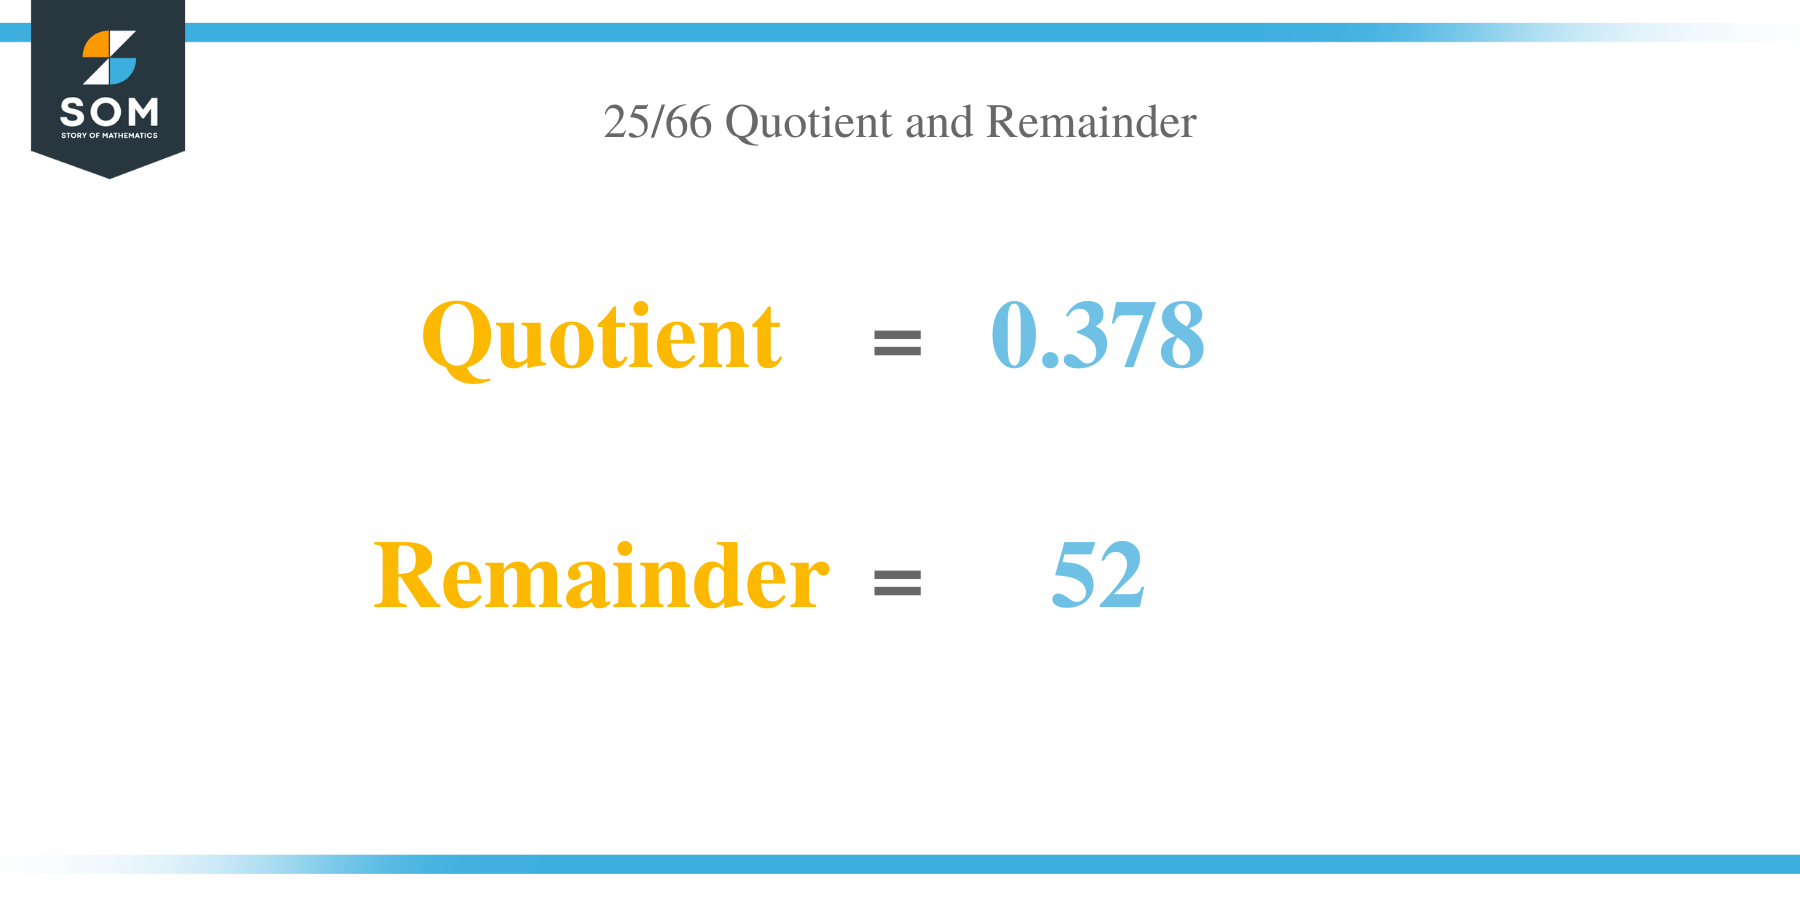 Quotient and Remainder of 25 per 66